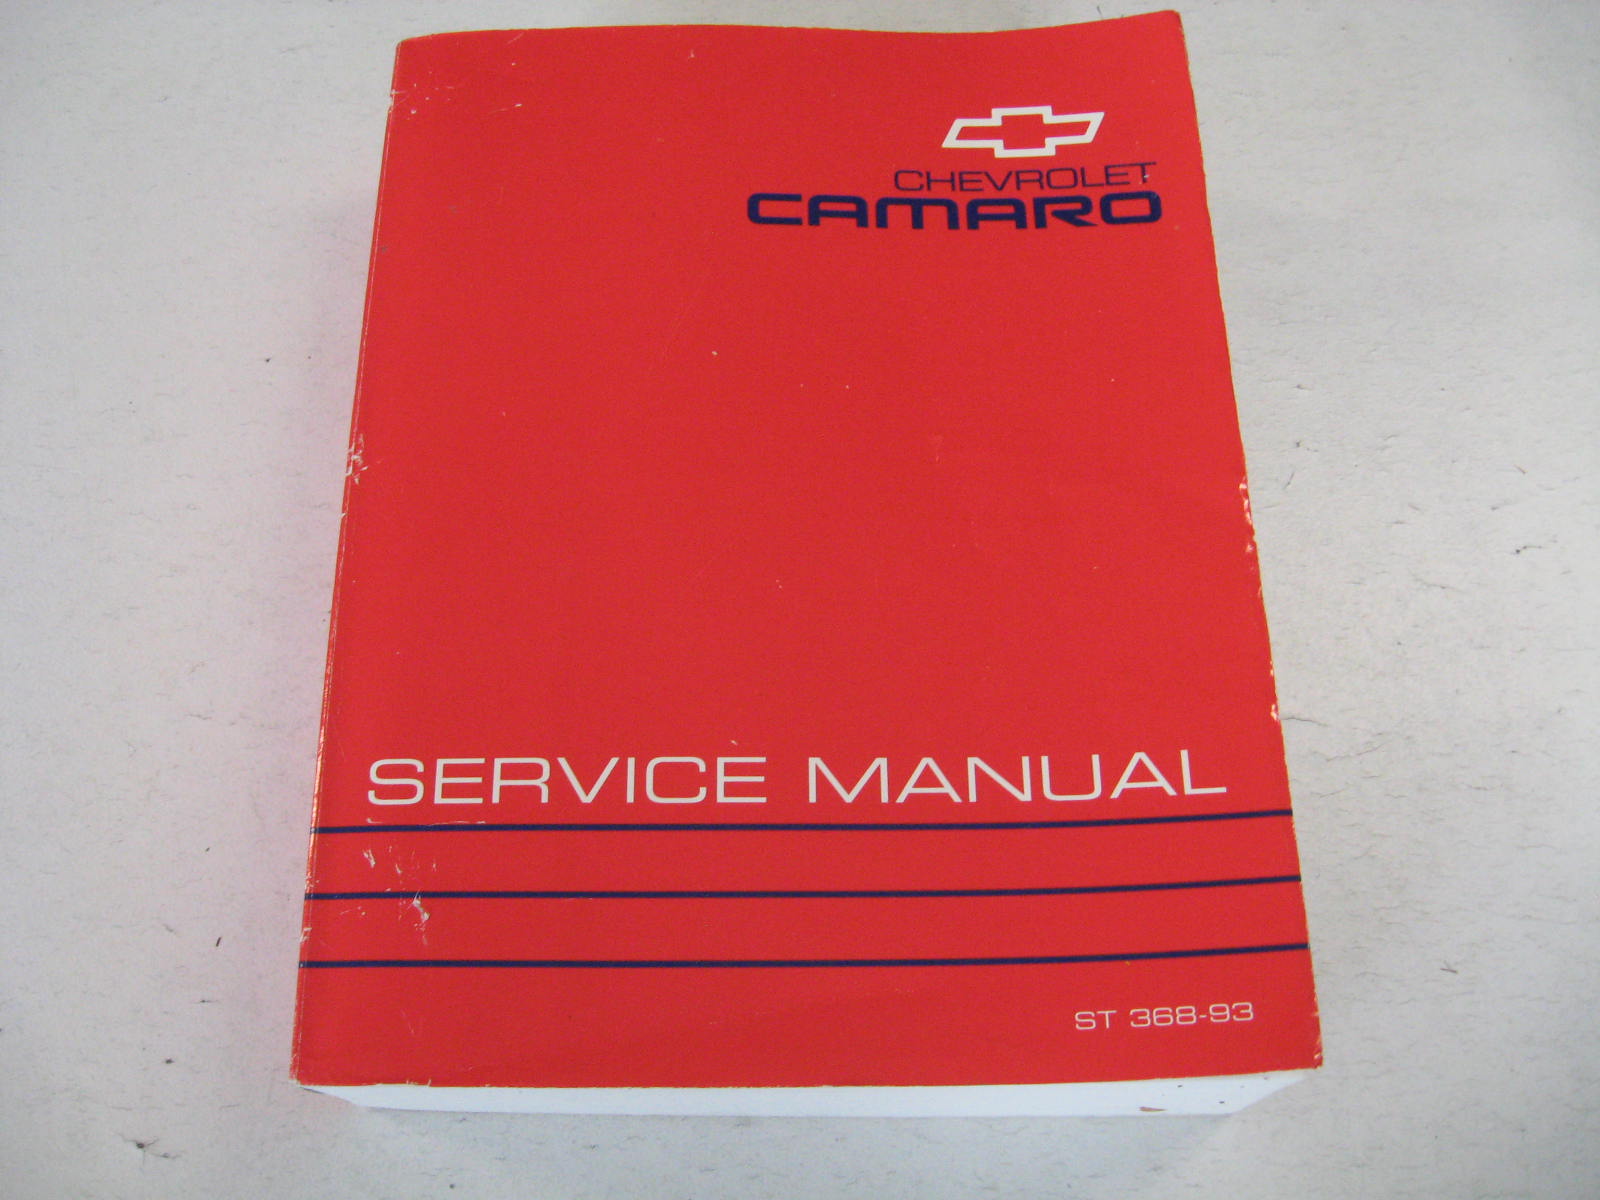 www.hortlund.se - 1993 Chevrolet Camaro Service Manual